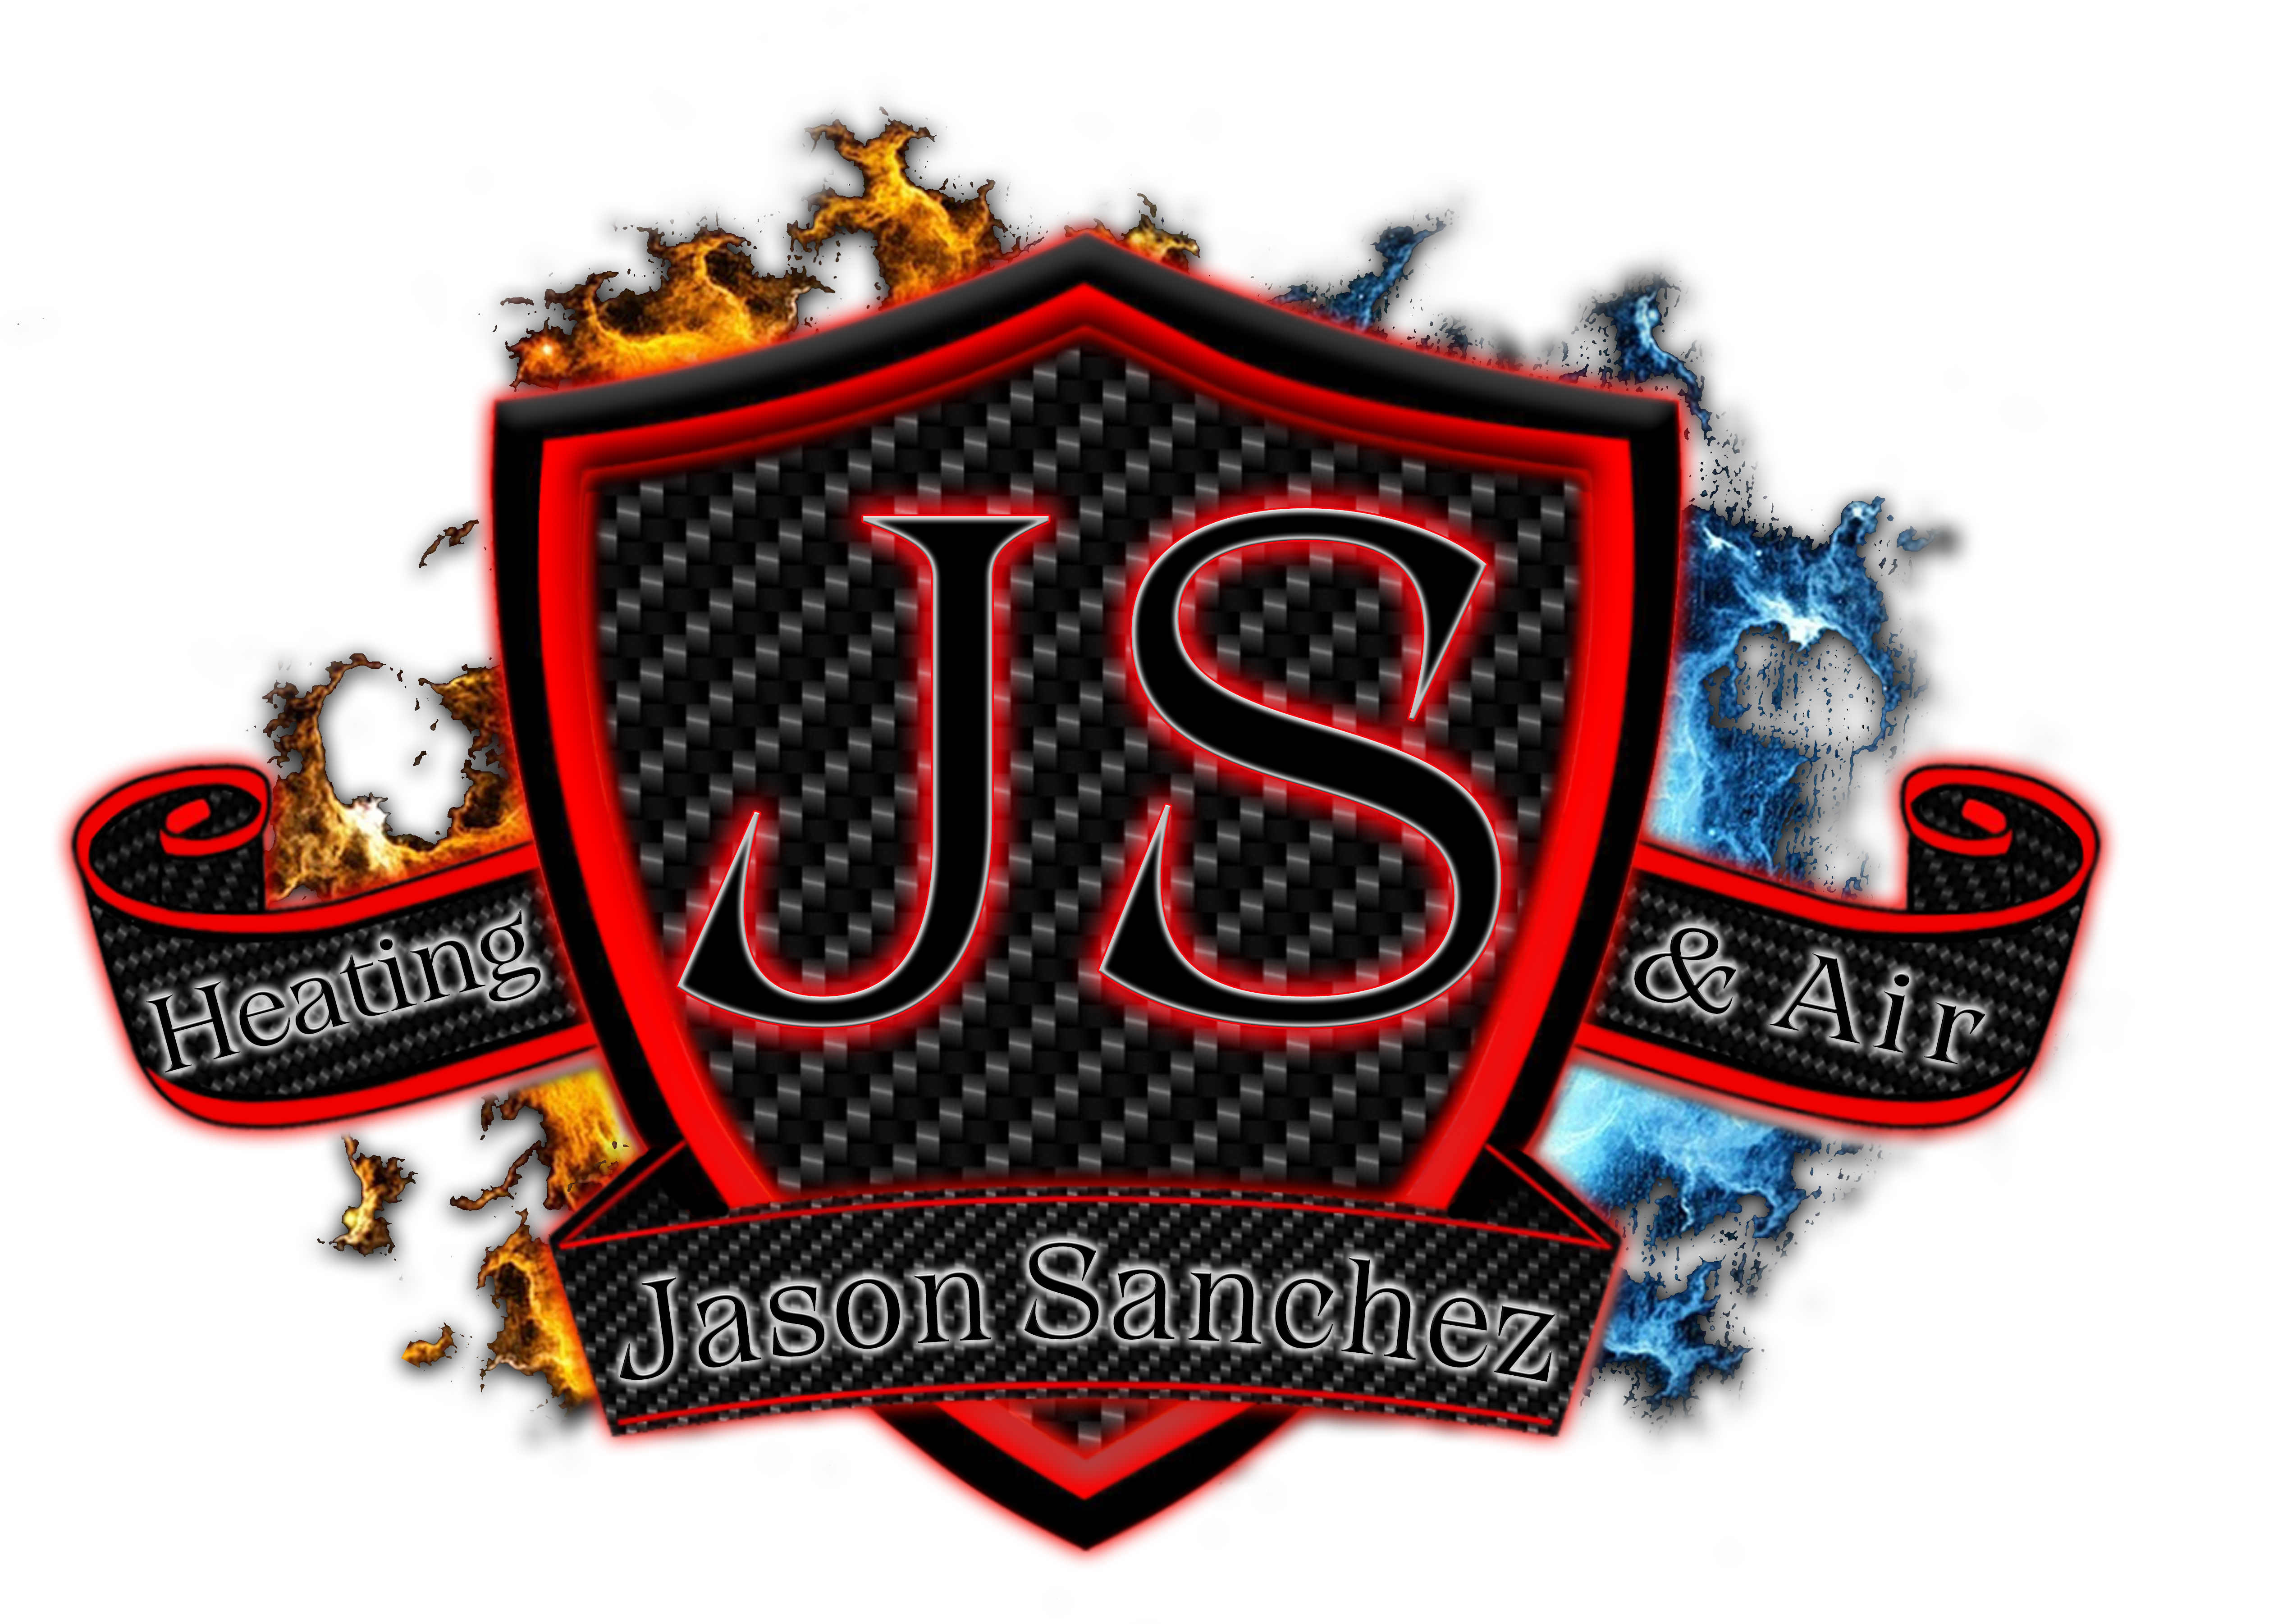 Jason Sanchez Heating and Air Conditioning Logo